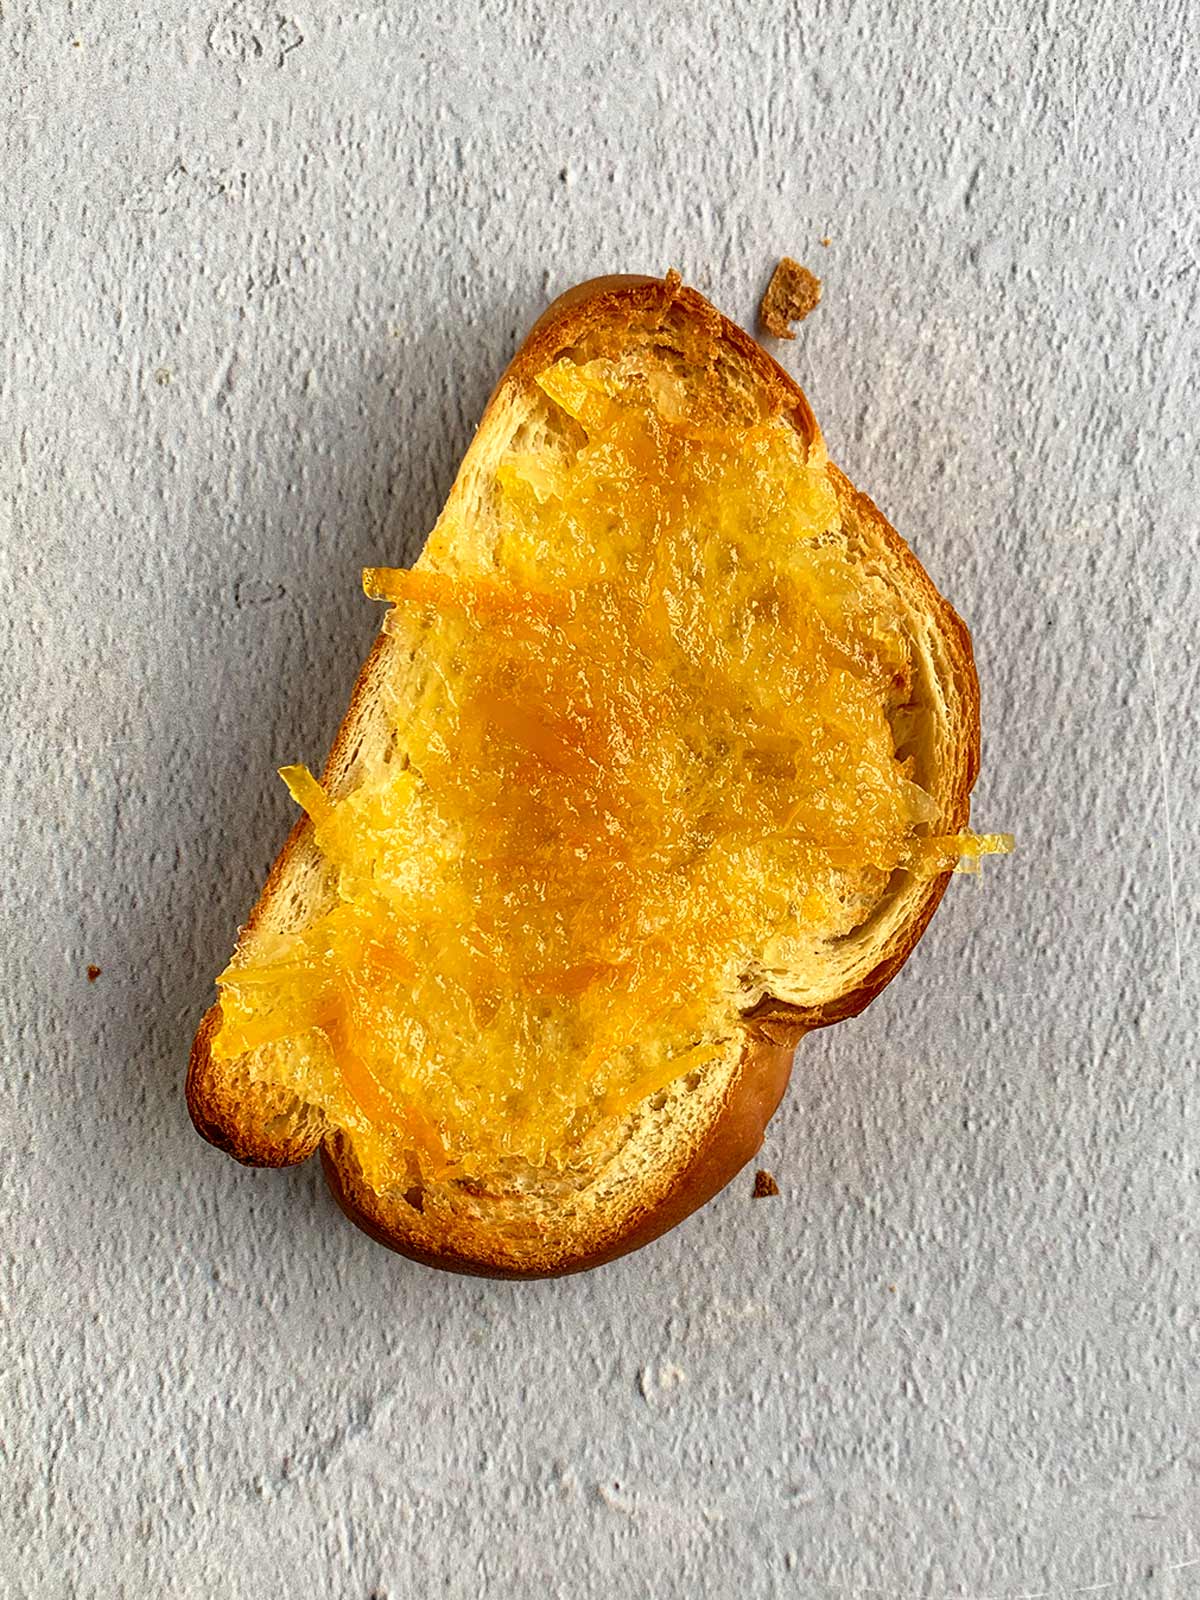 Challah bread spread with citrus marmalade.